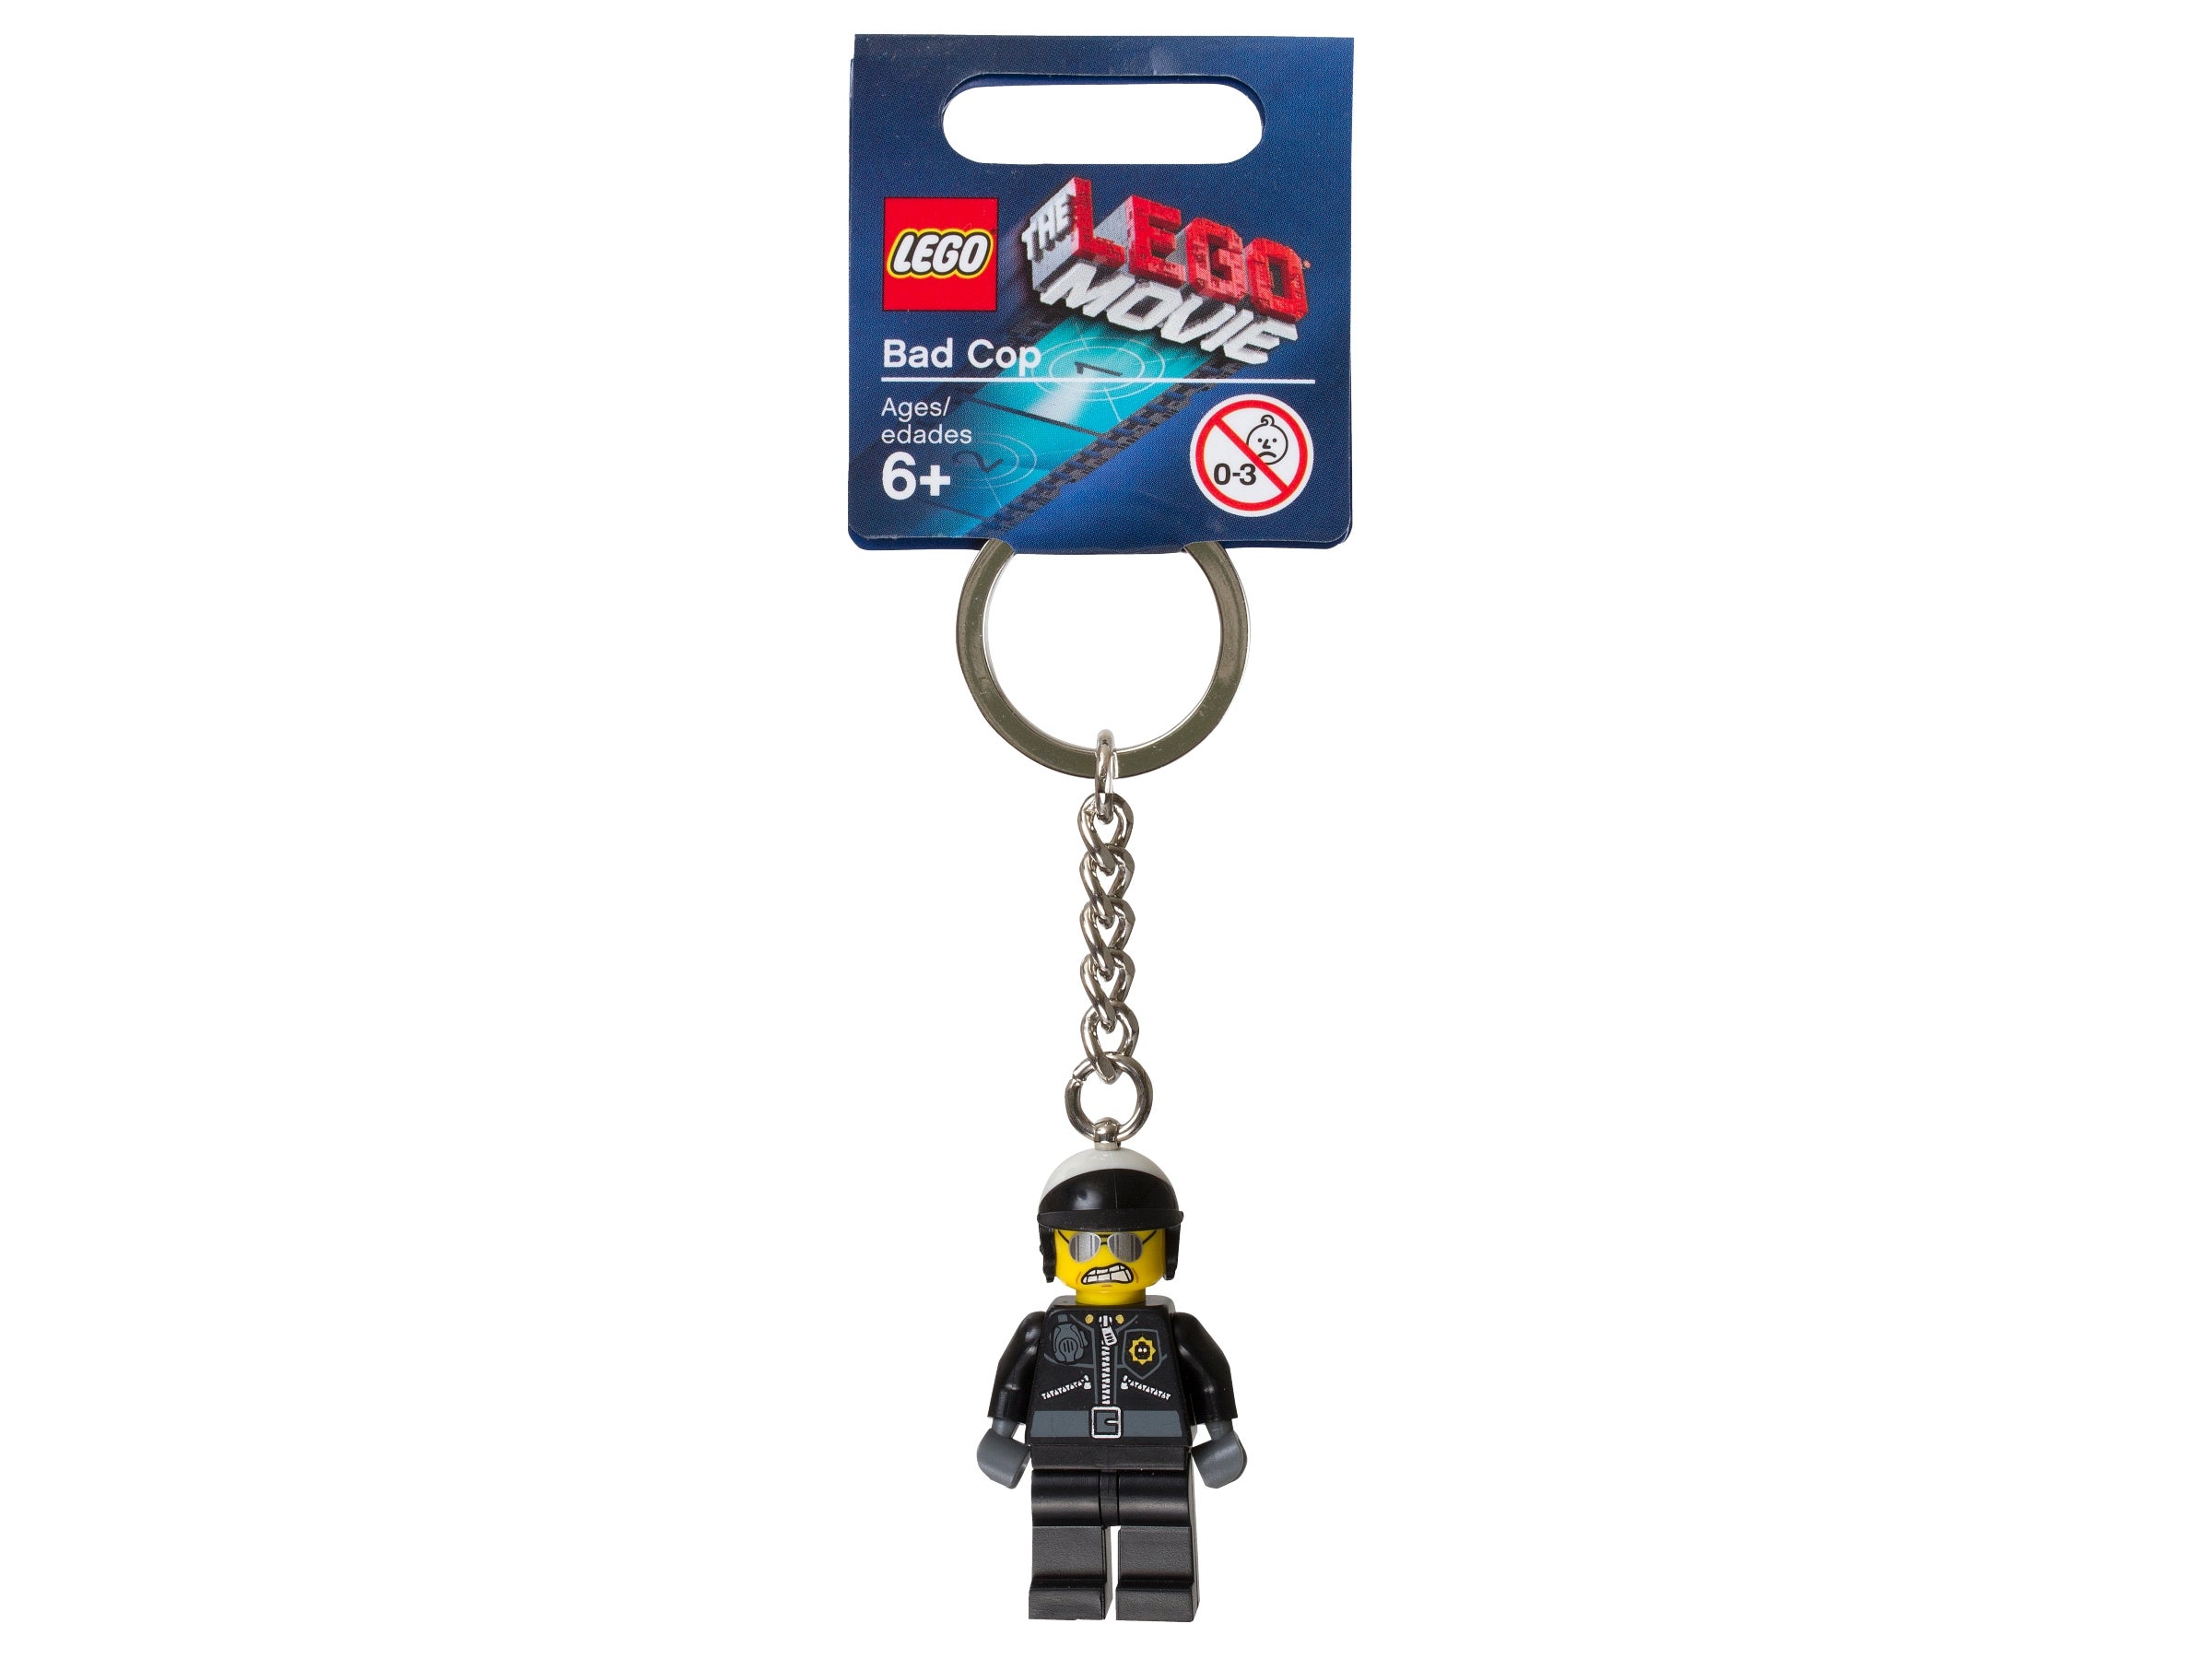 Lego Bad Cop The Lego Movie Genuine Minifigure